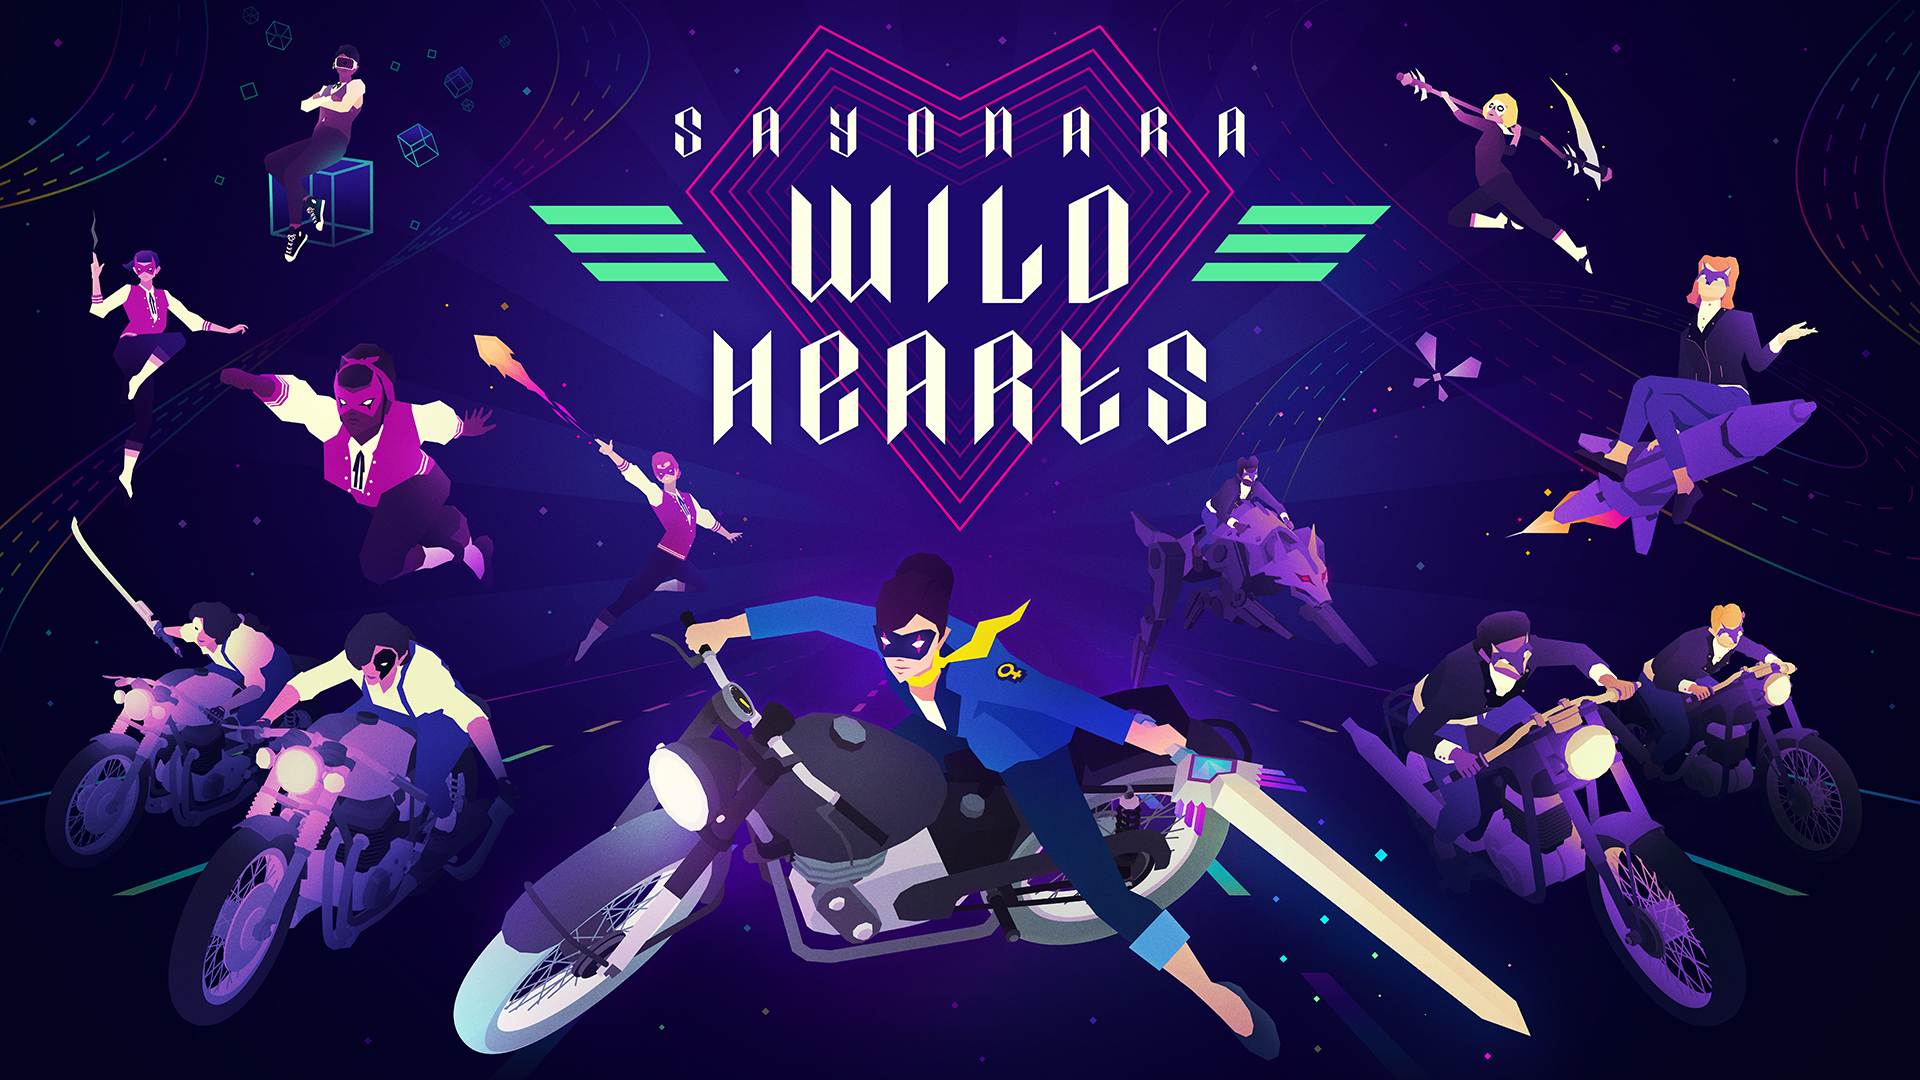 Sayonara Wild Hearts physical version seeing international release